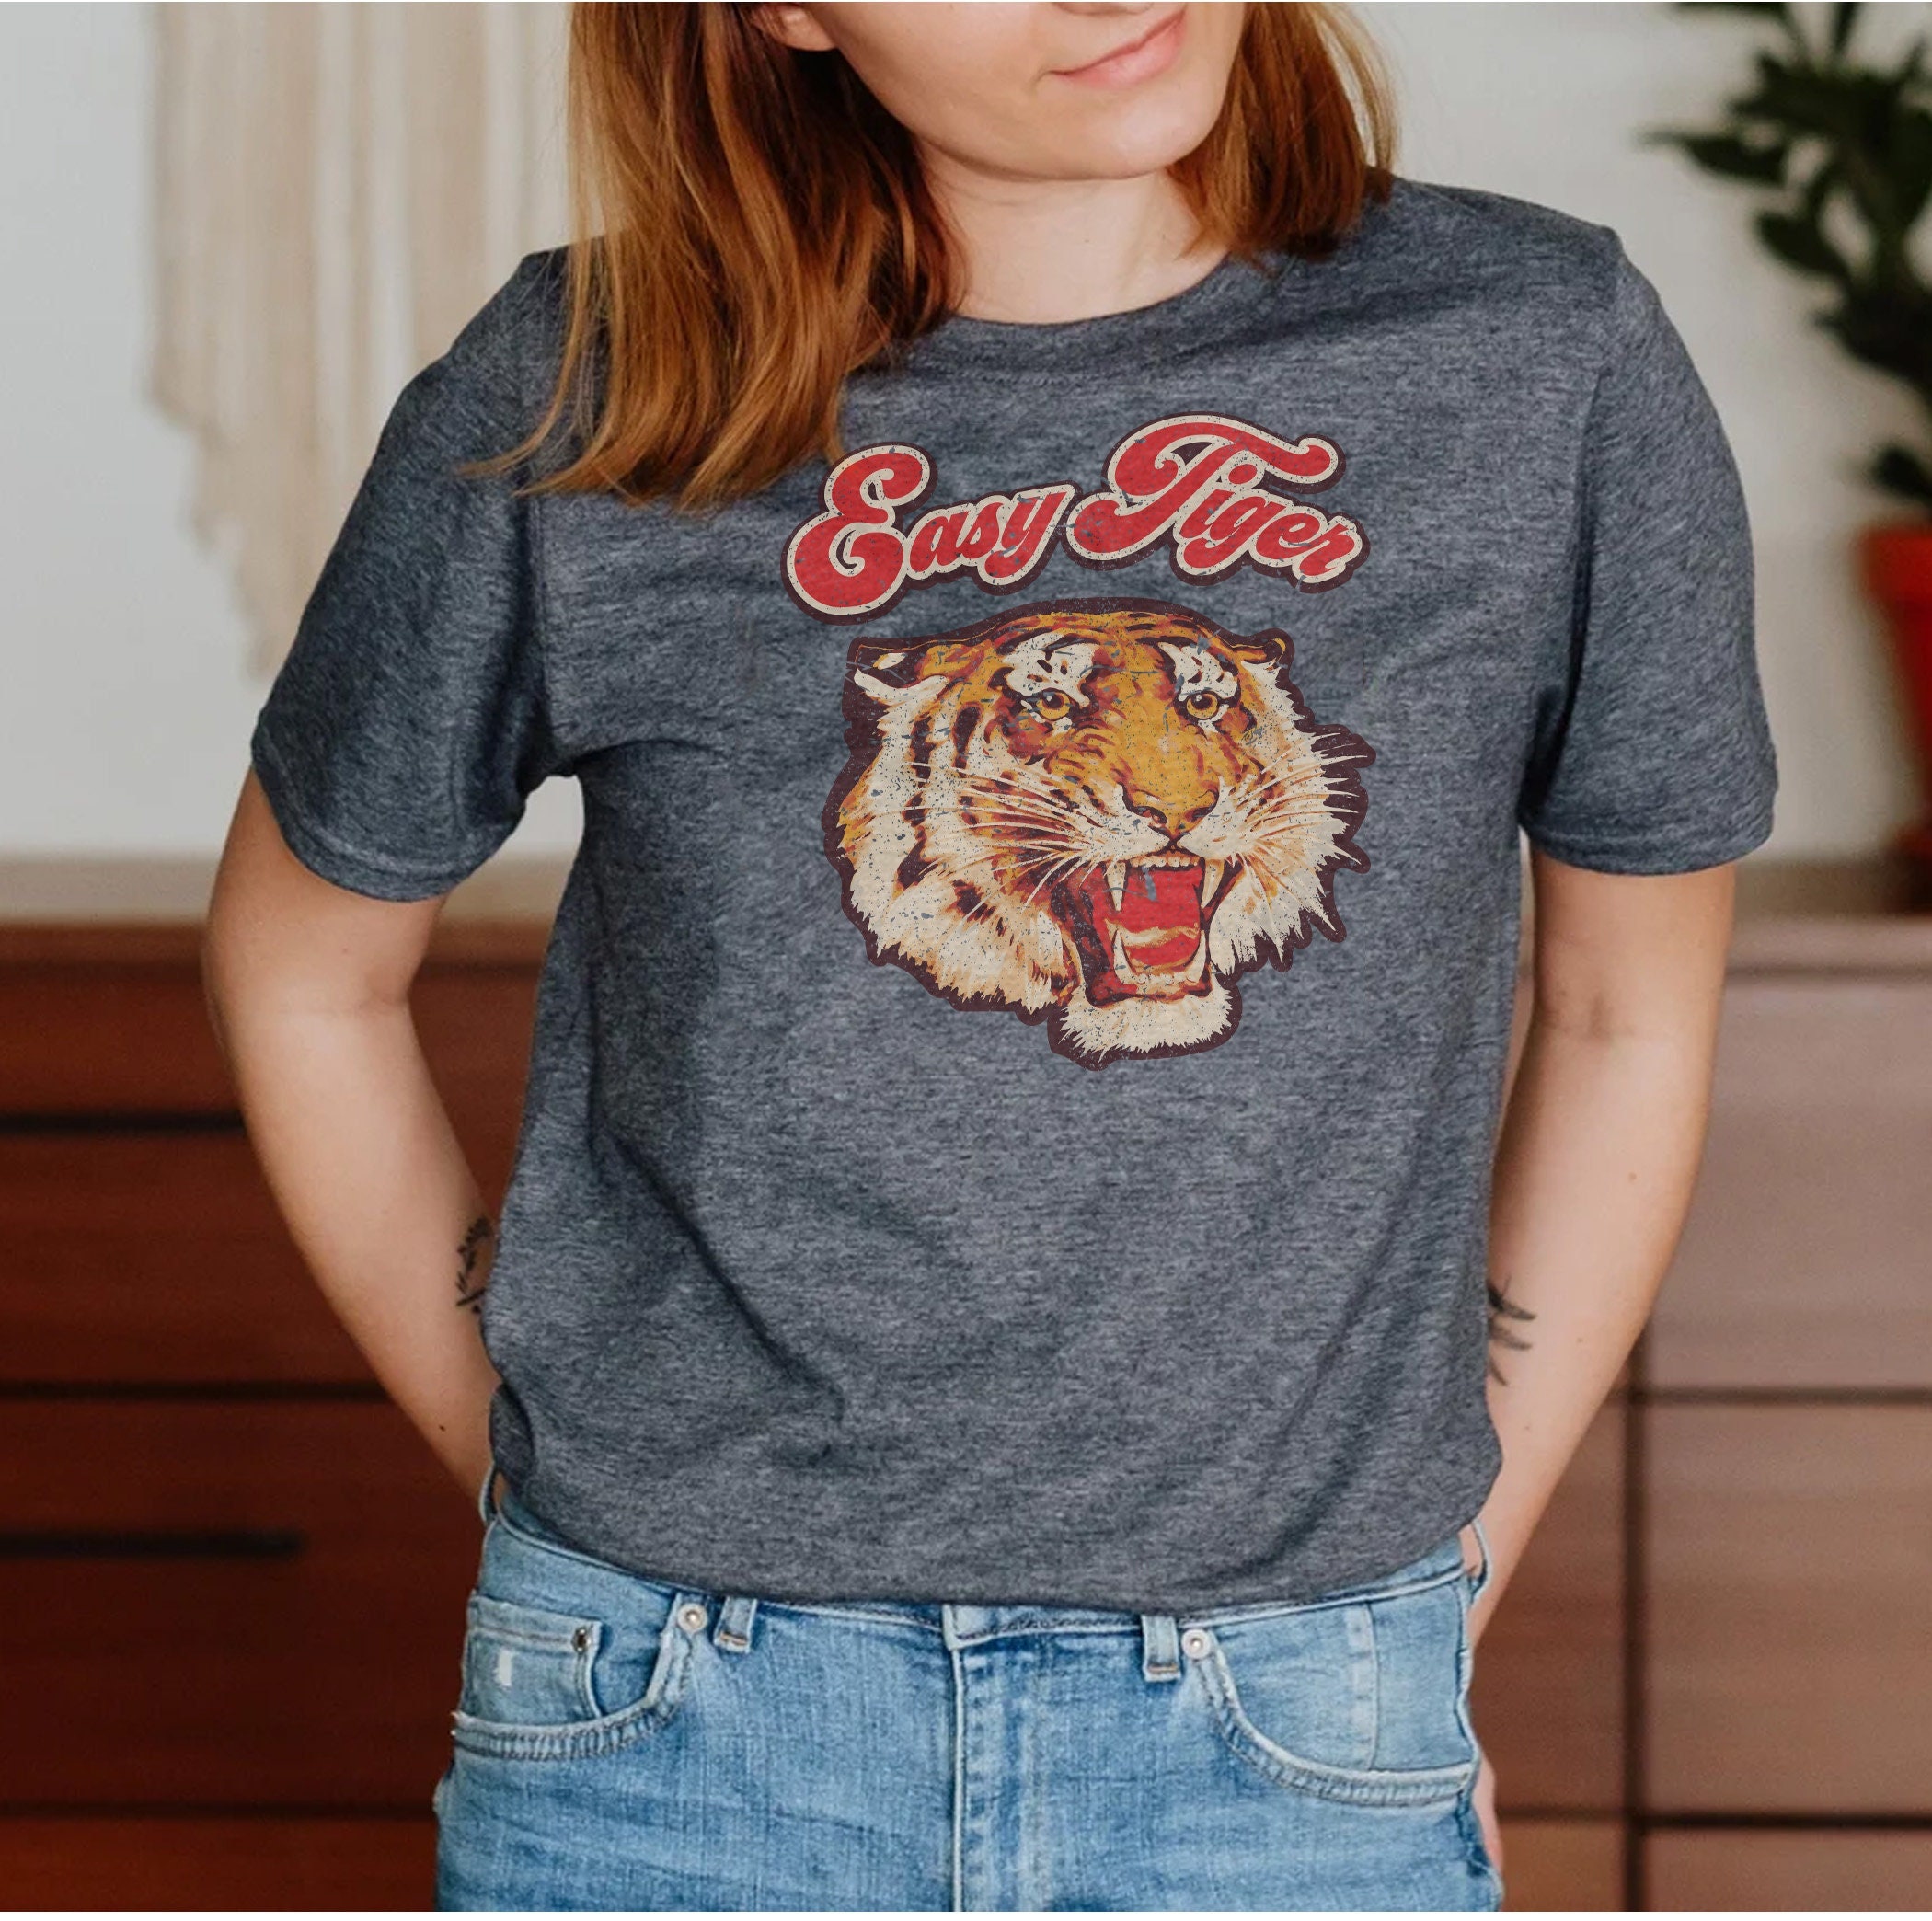 Easy Tiger Shirt, Summer Pocket Print Shirt, Graphic T Shirt Unisex Crew